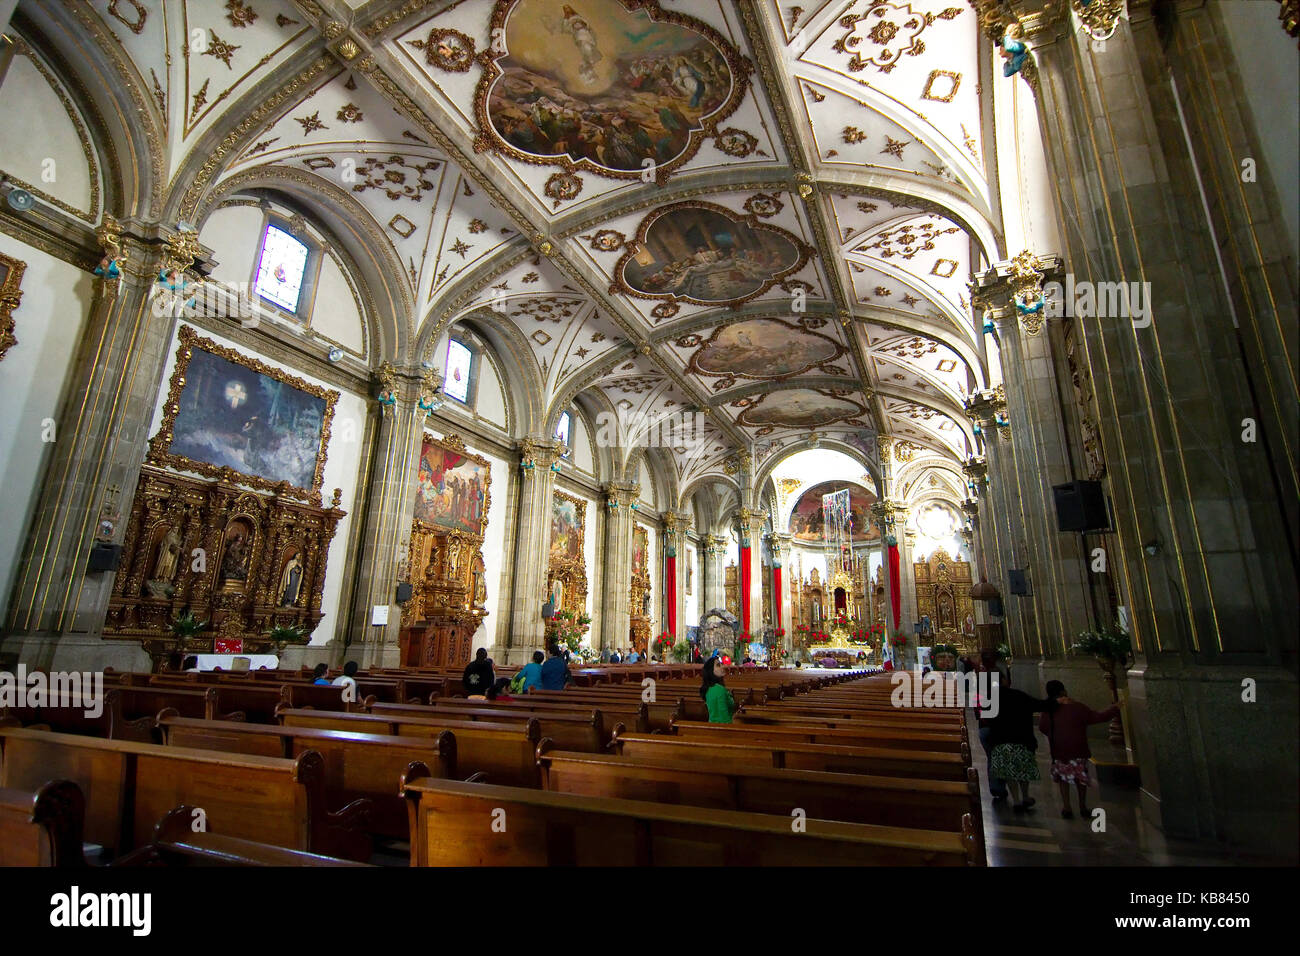 Coyoacan, Mexico City, Mexico - 2017: Interior of Parroquia San Juan Bautista, a baroque church & former convent founded early in Cortes' 16th-century. Stock Photo